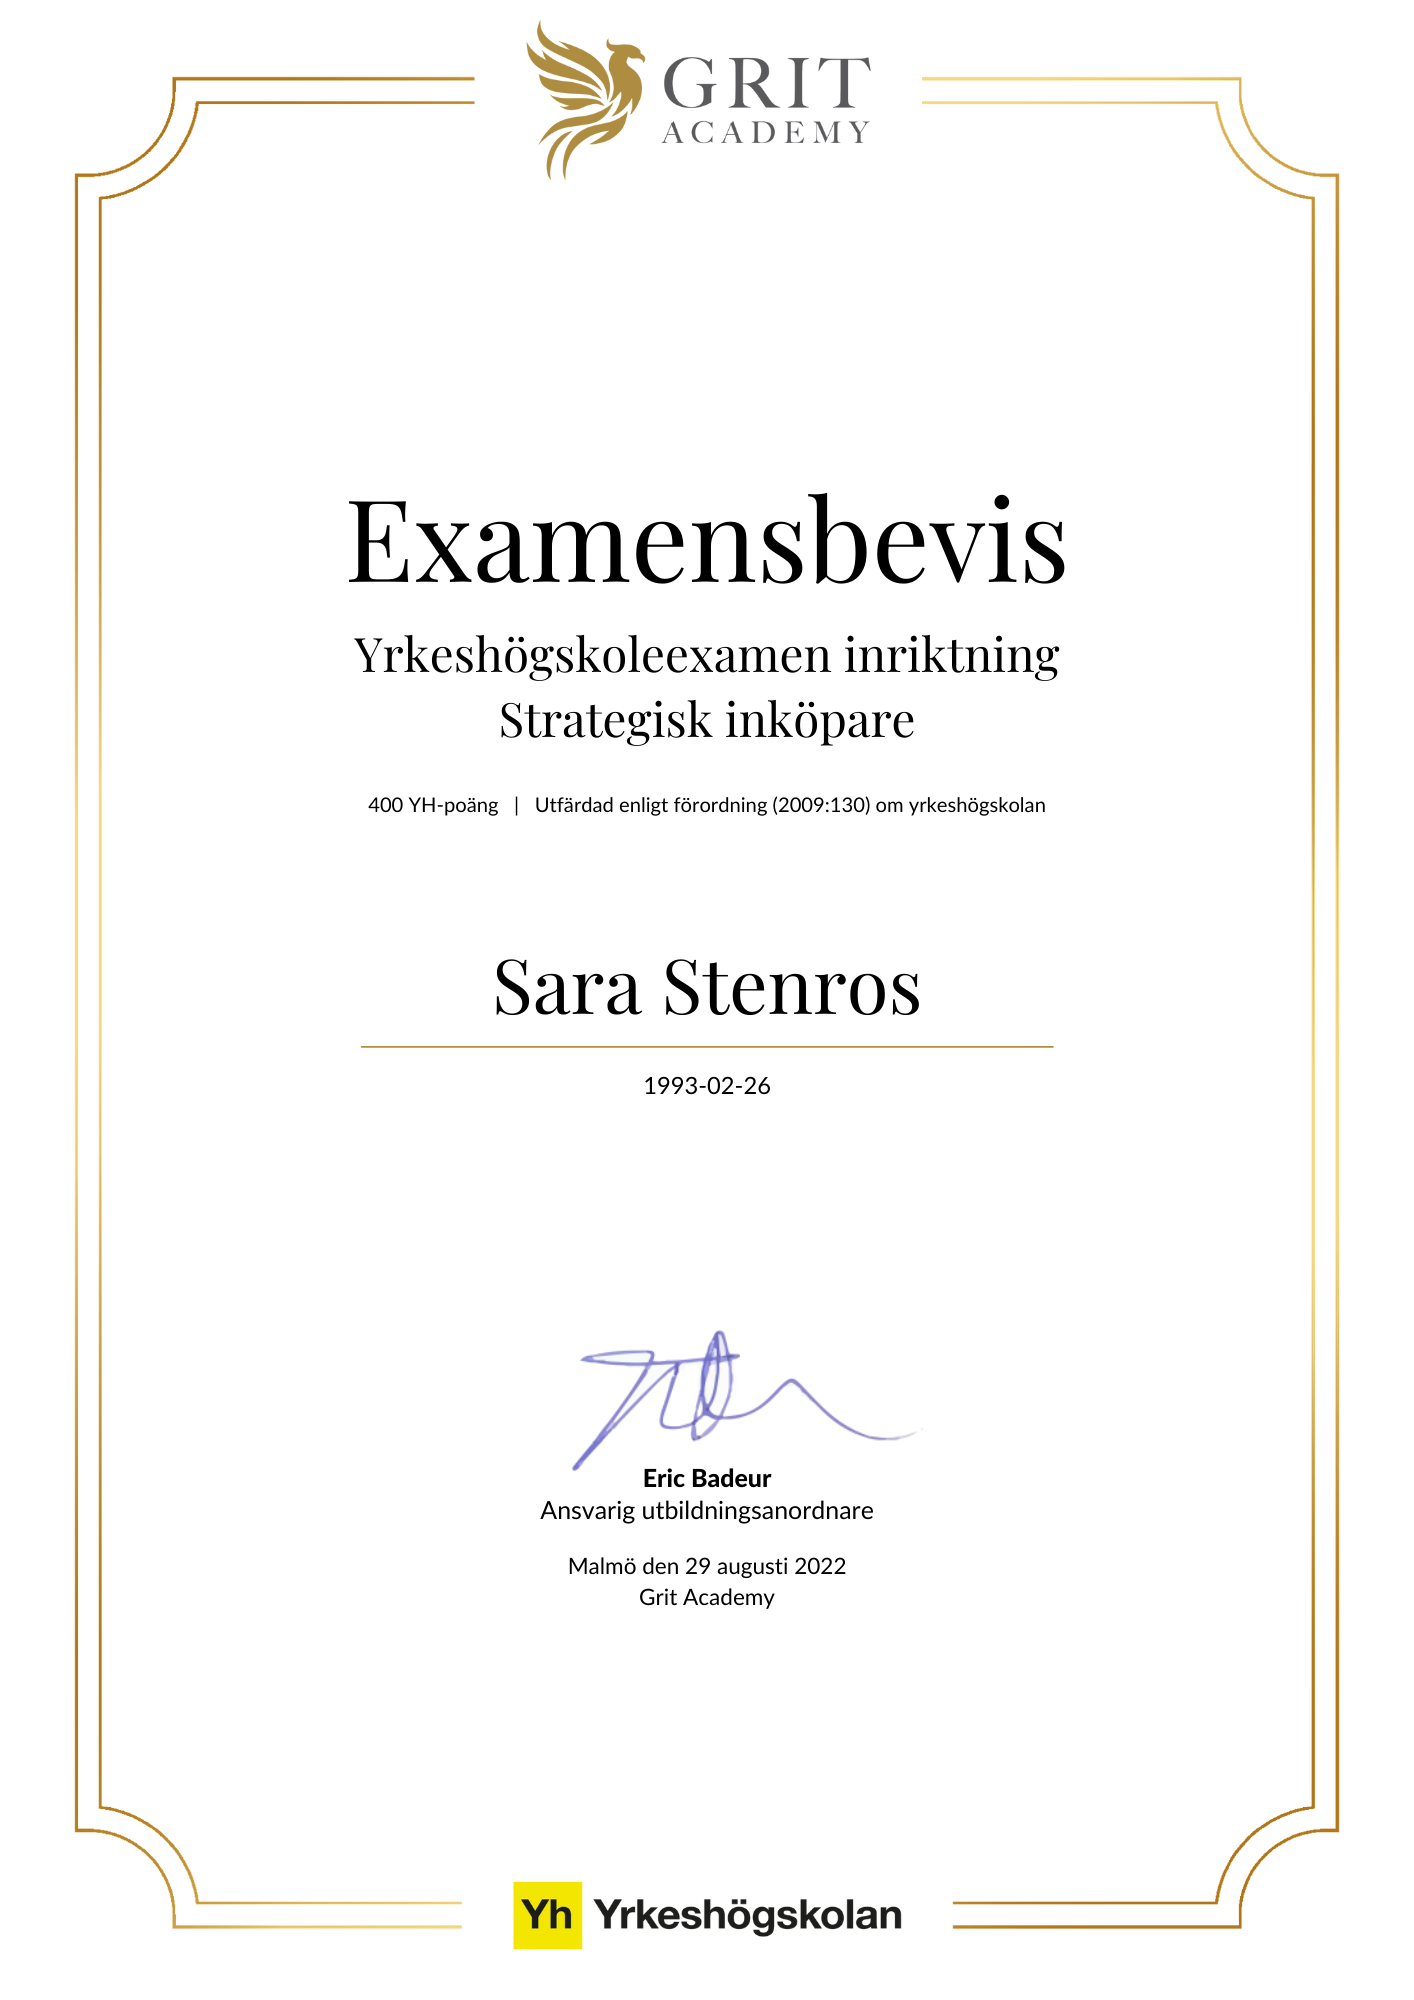 Examensbevis Sara Stenros - 1